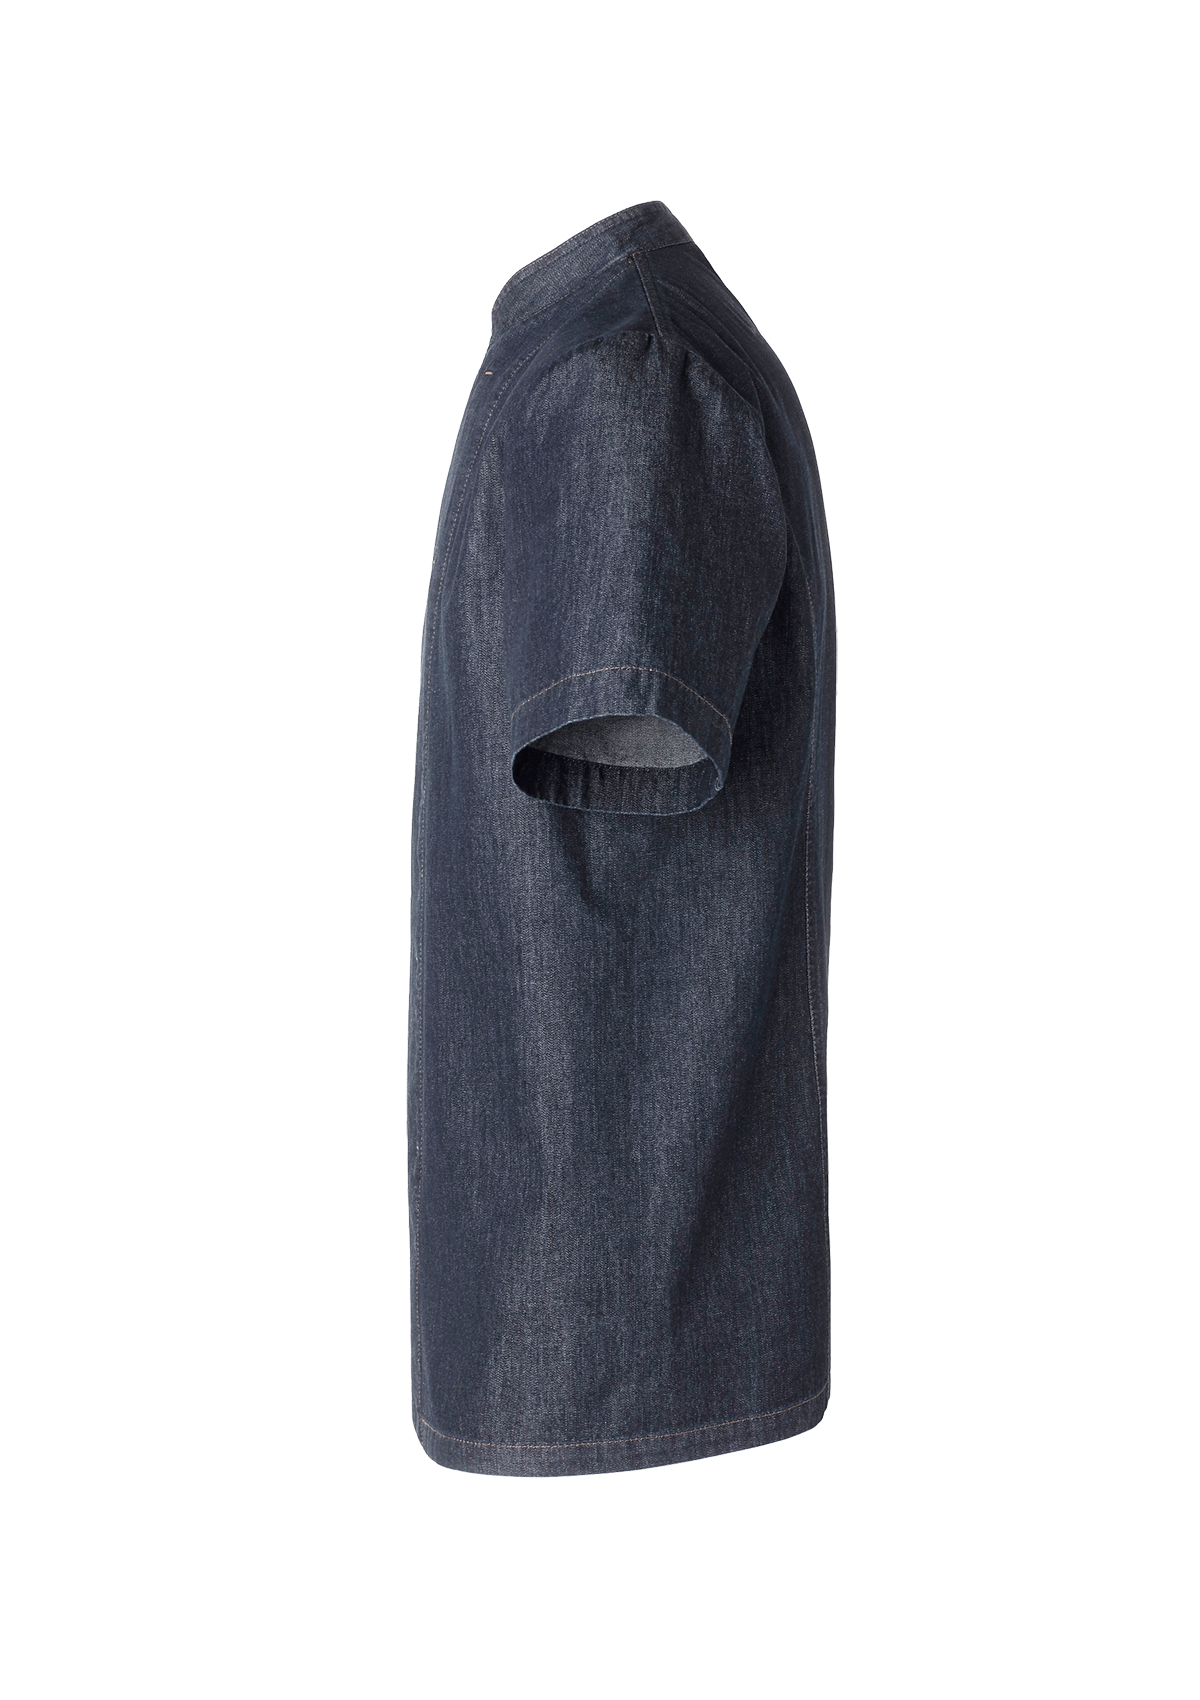 Men's Chef jacket in denim with short sleeves. Segers | Cookniche